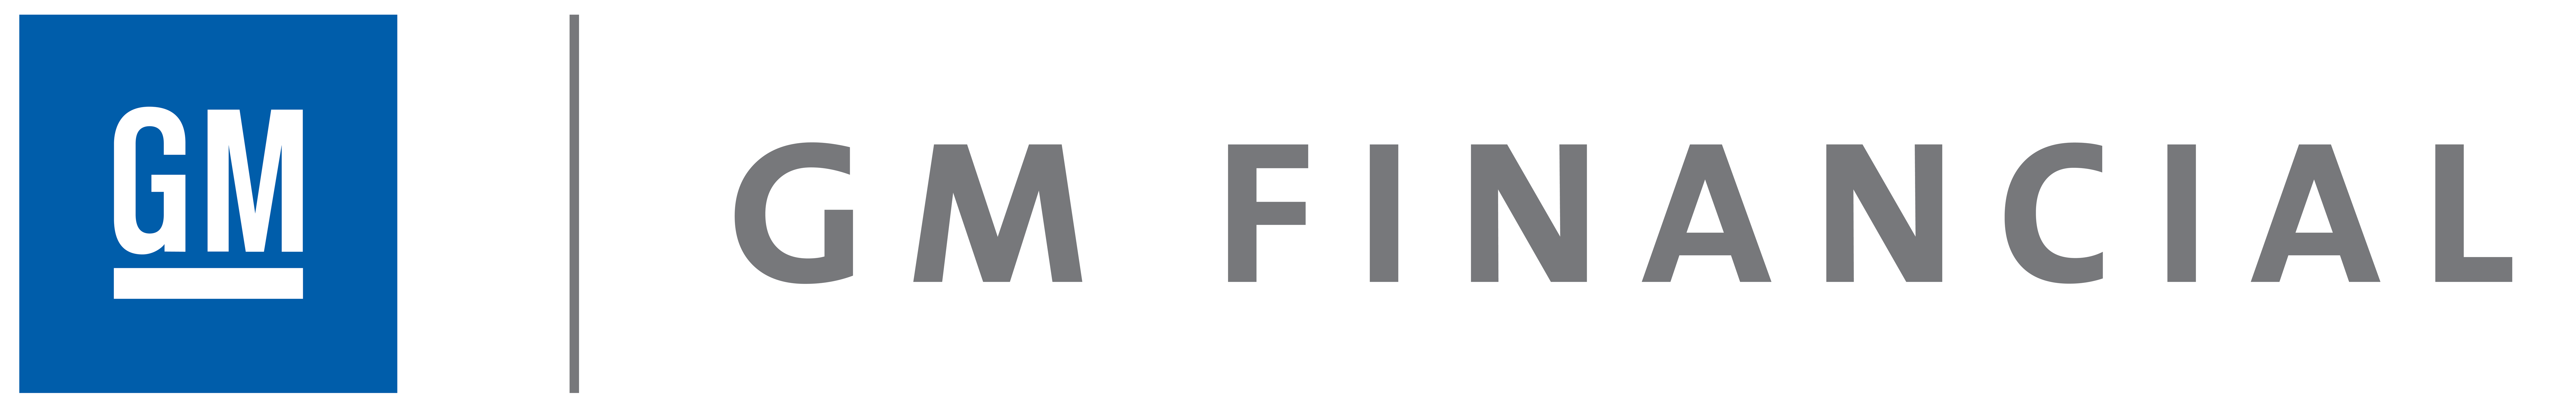 GM Financial logo